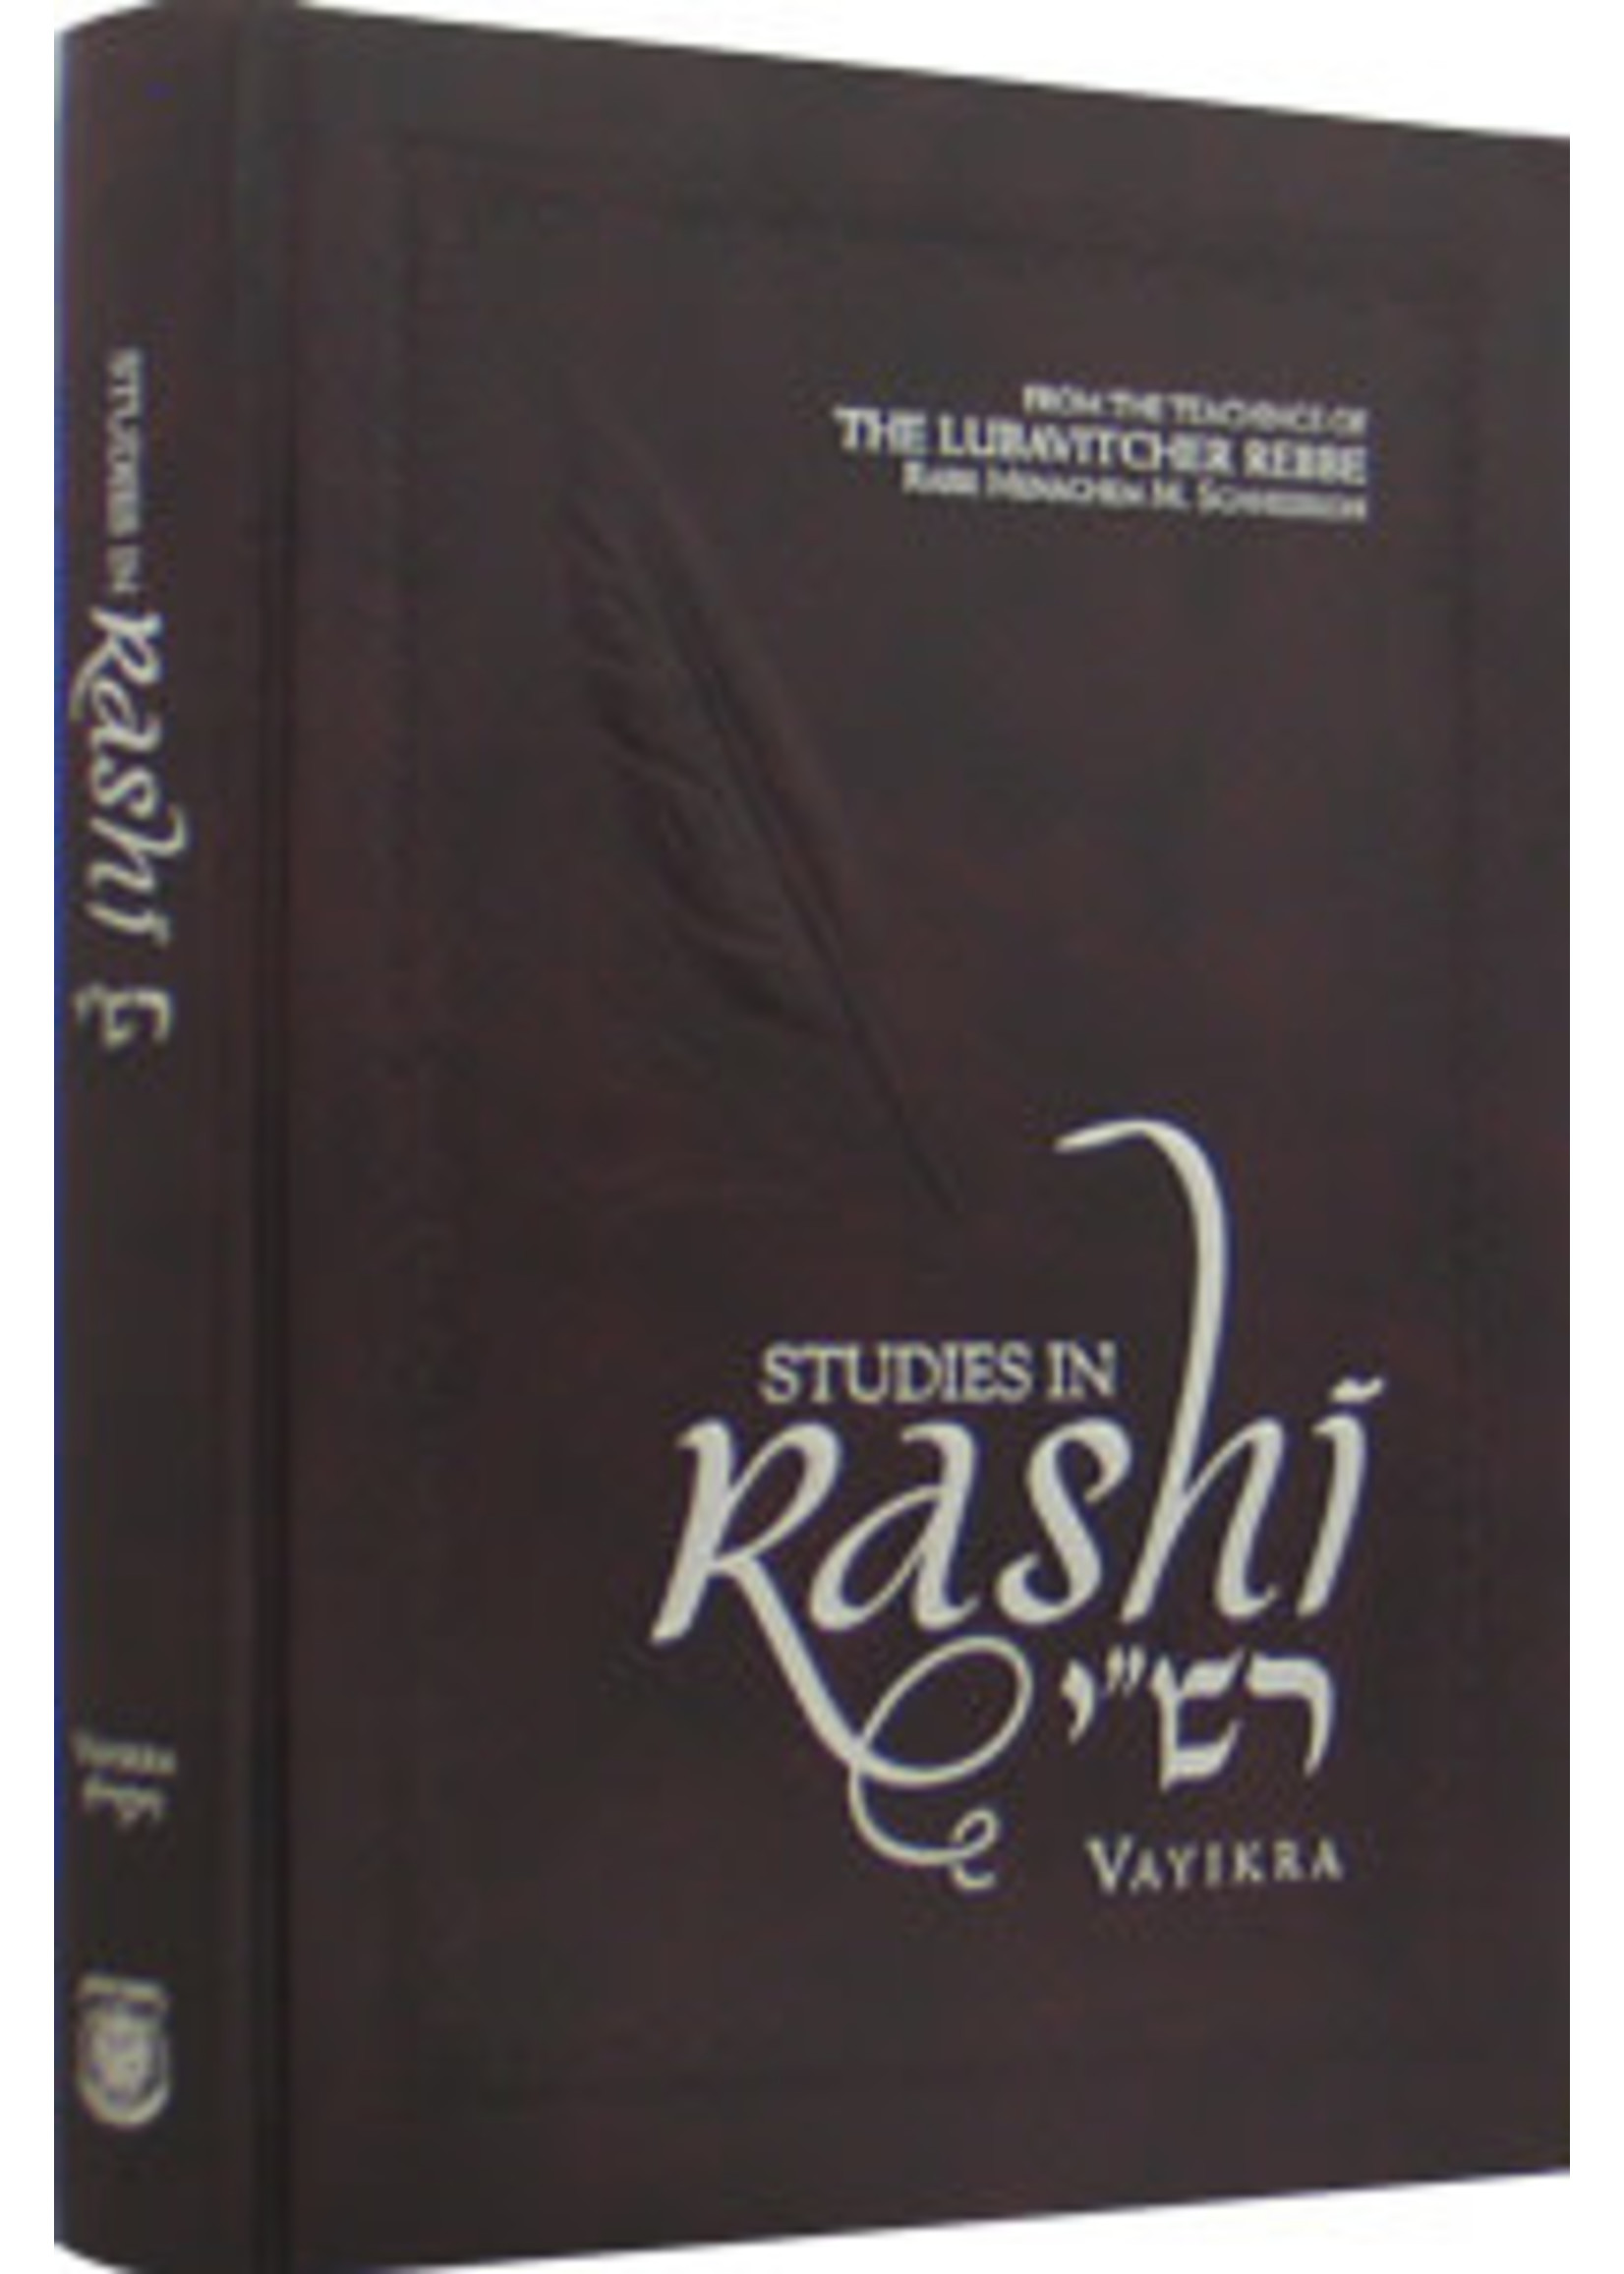 STUDIES IN RASHI VAYIKRAH